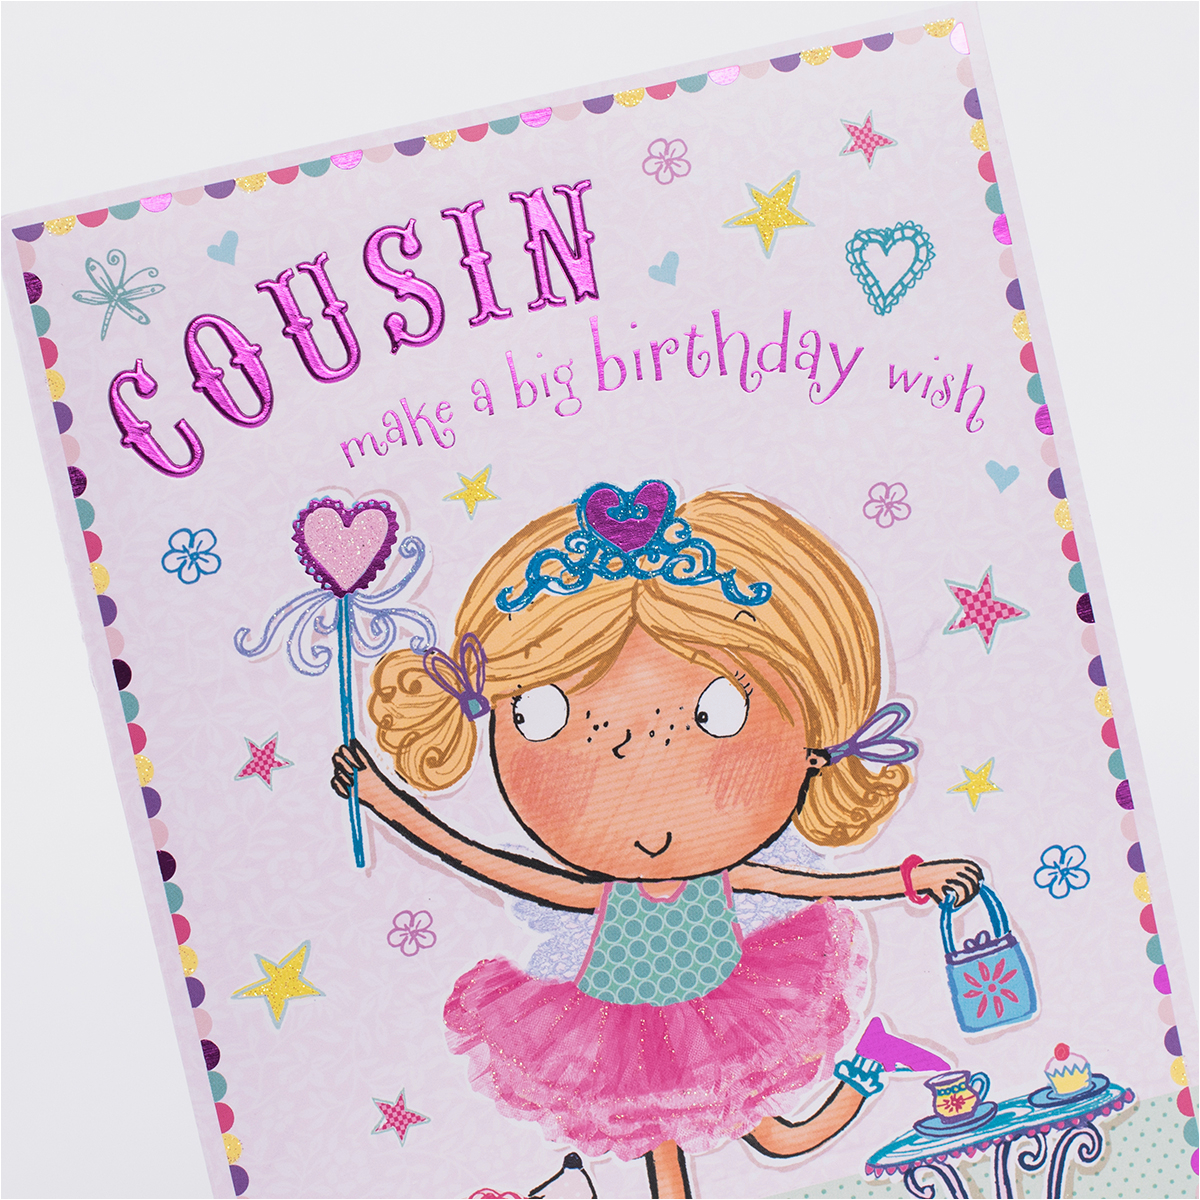 birthday card cousin make a big birthday wish